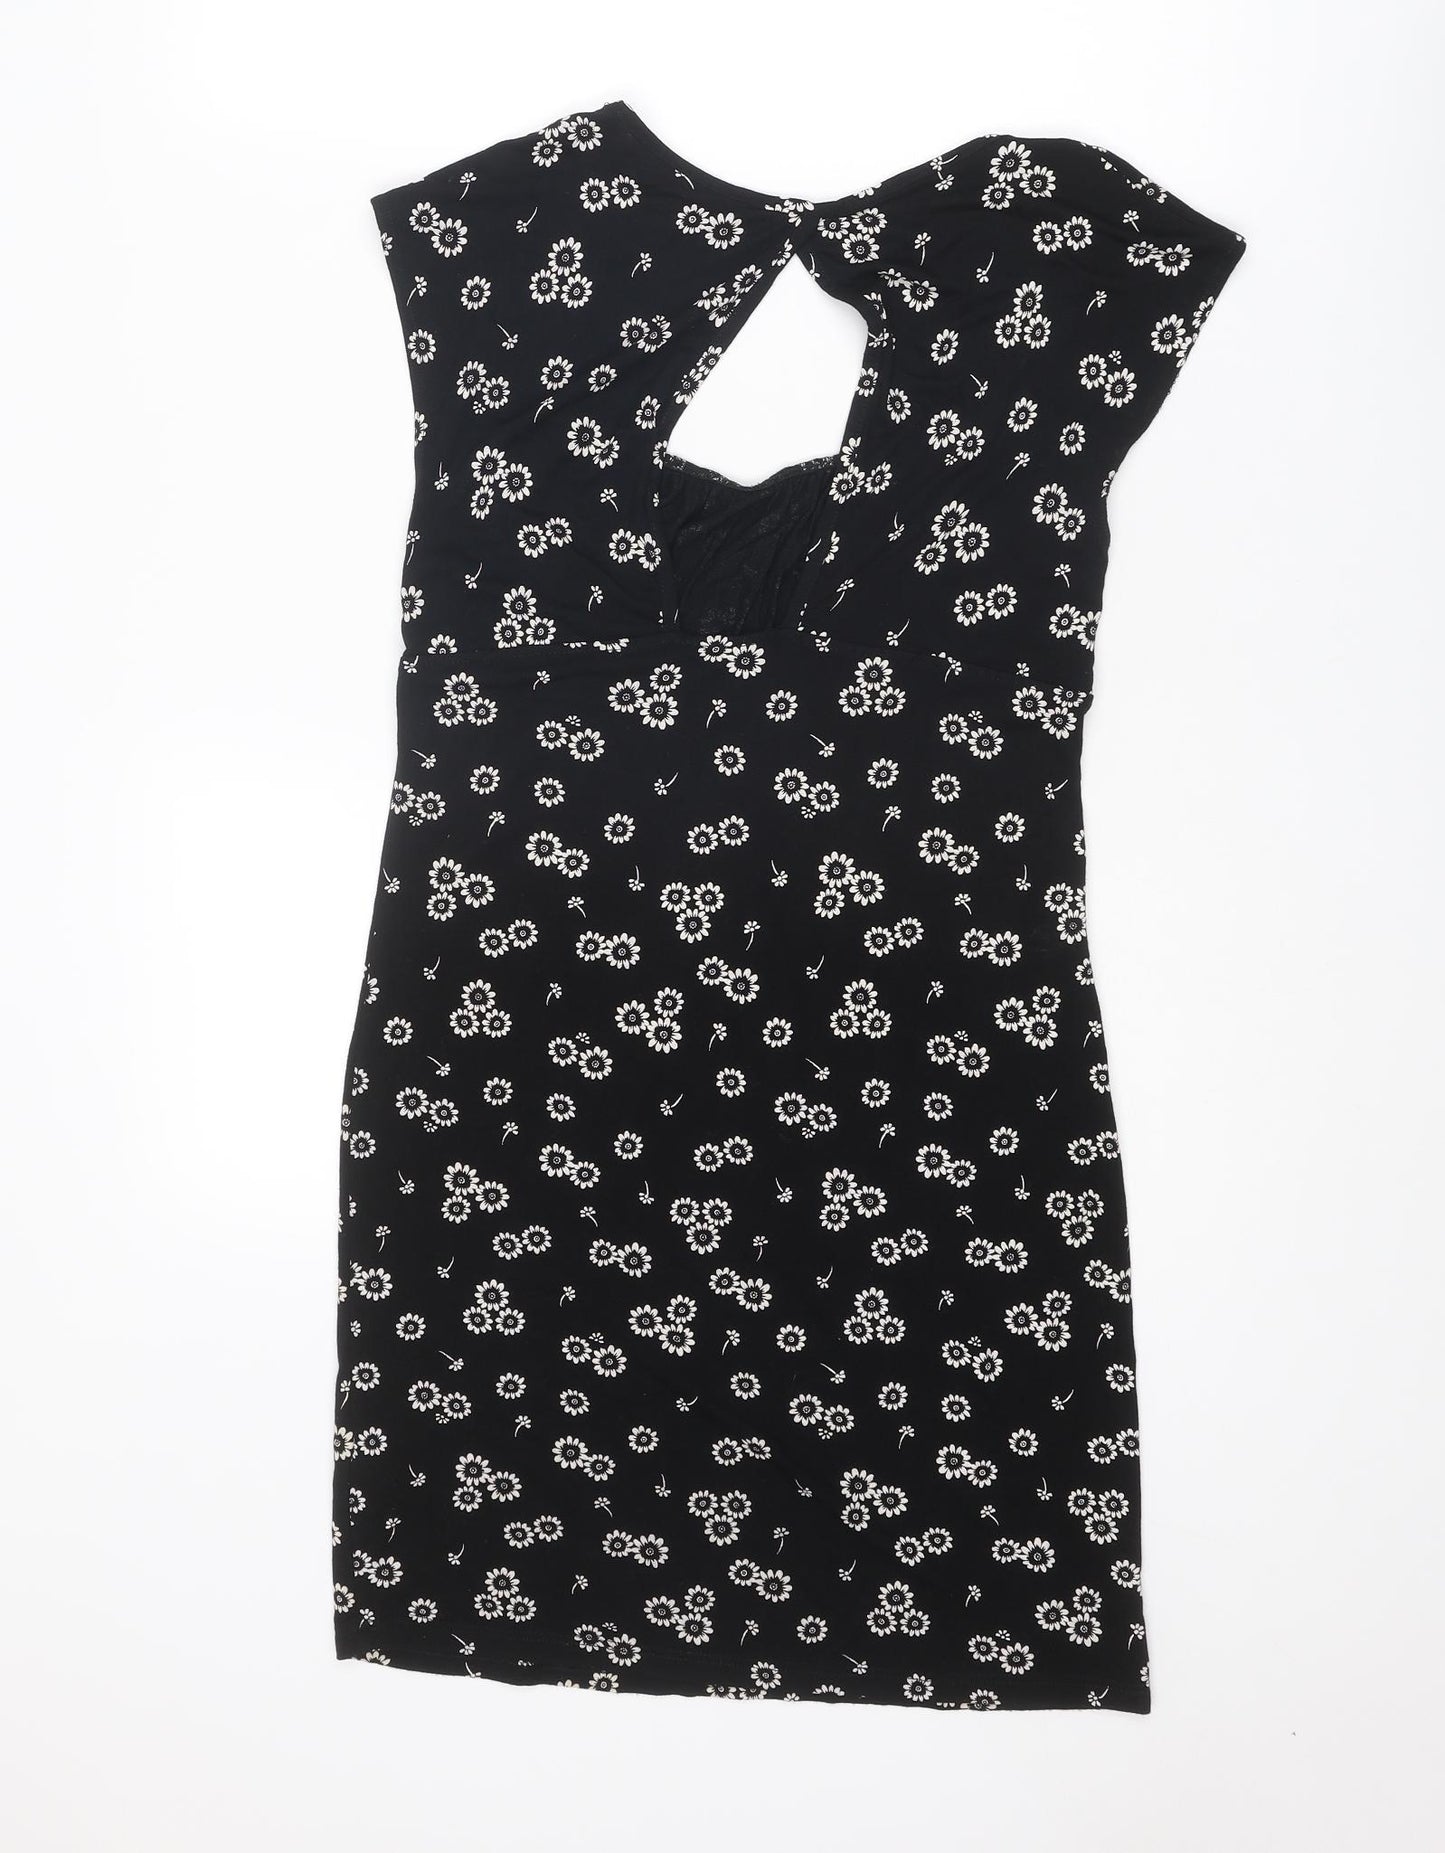 Topshop Womens Black Floral Viscose A-Line Size 12 Square Neck Pullover